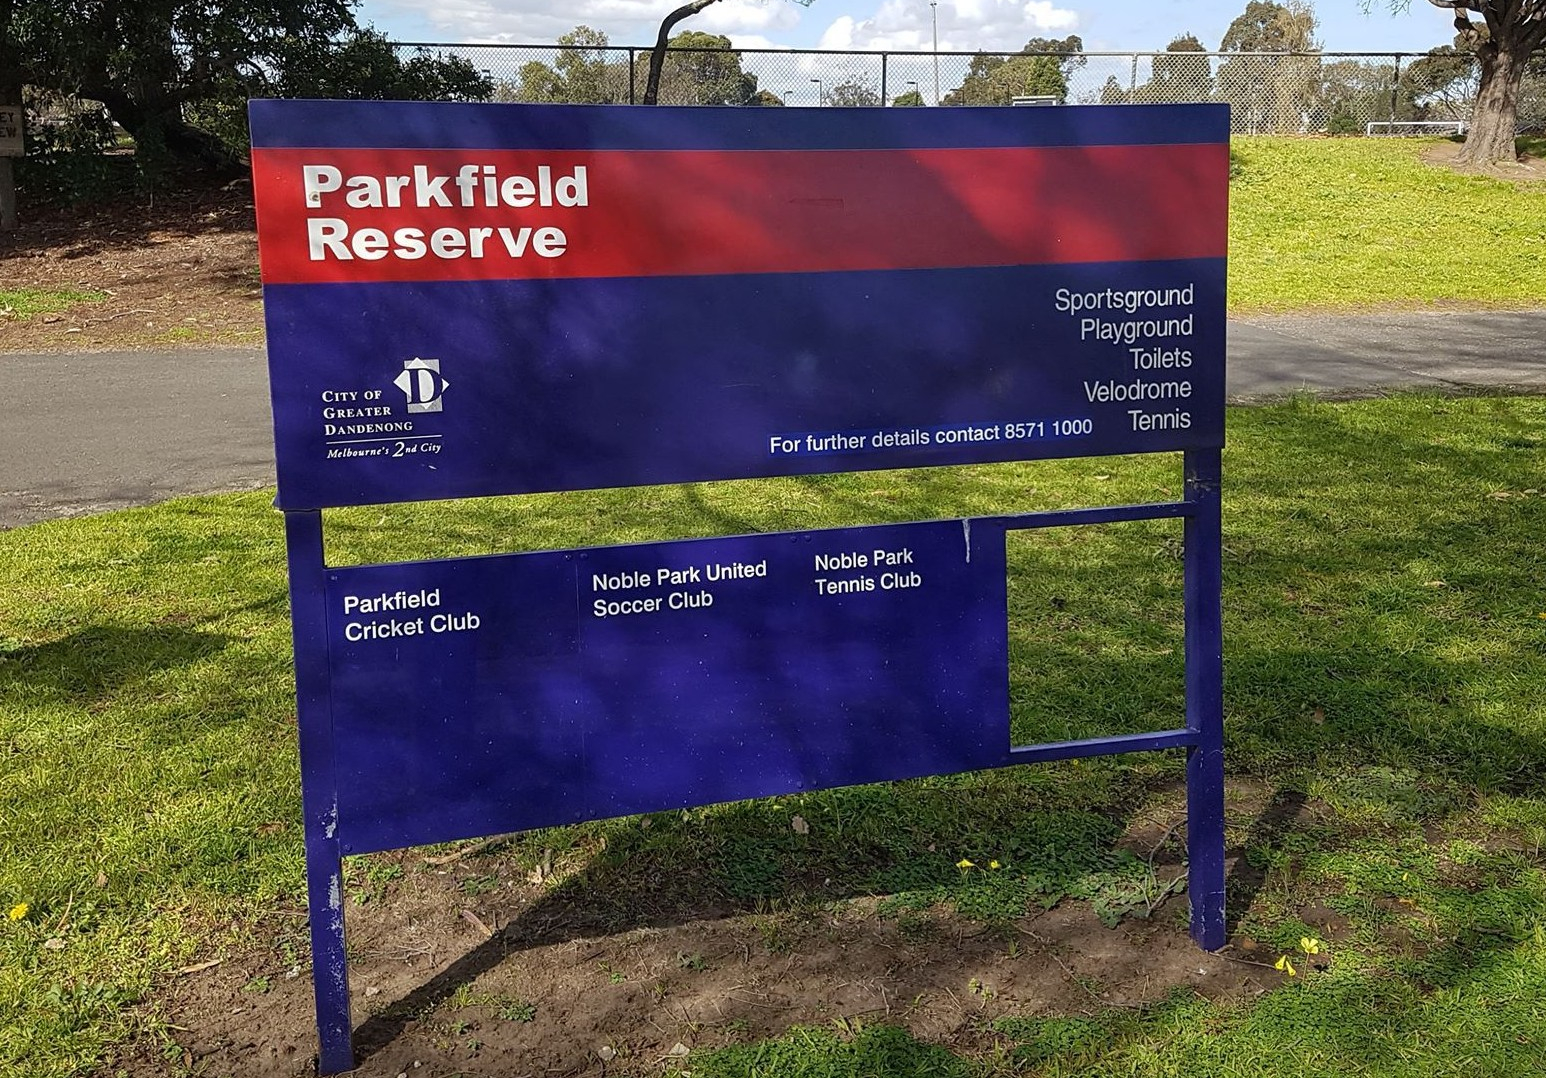 Parkfield Reserve wayfinding, 3rd September 2018, image credit: Steve Barnett